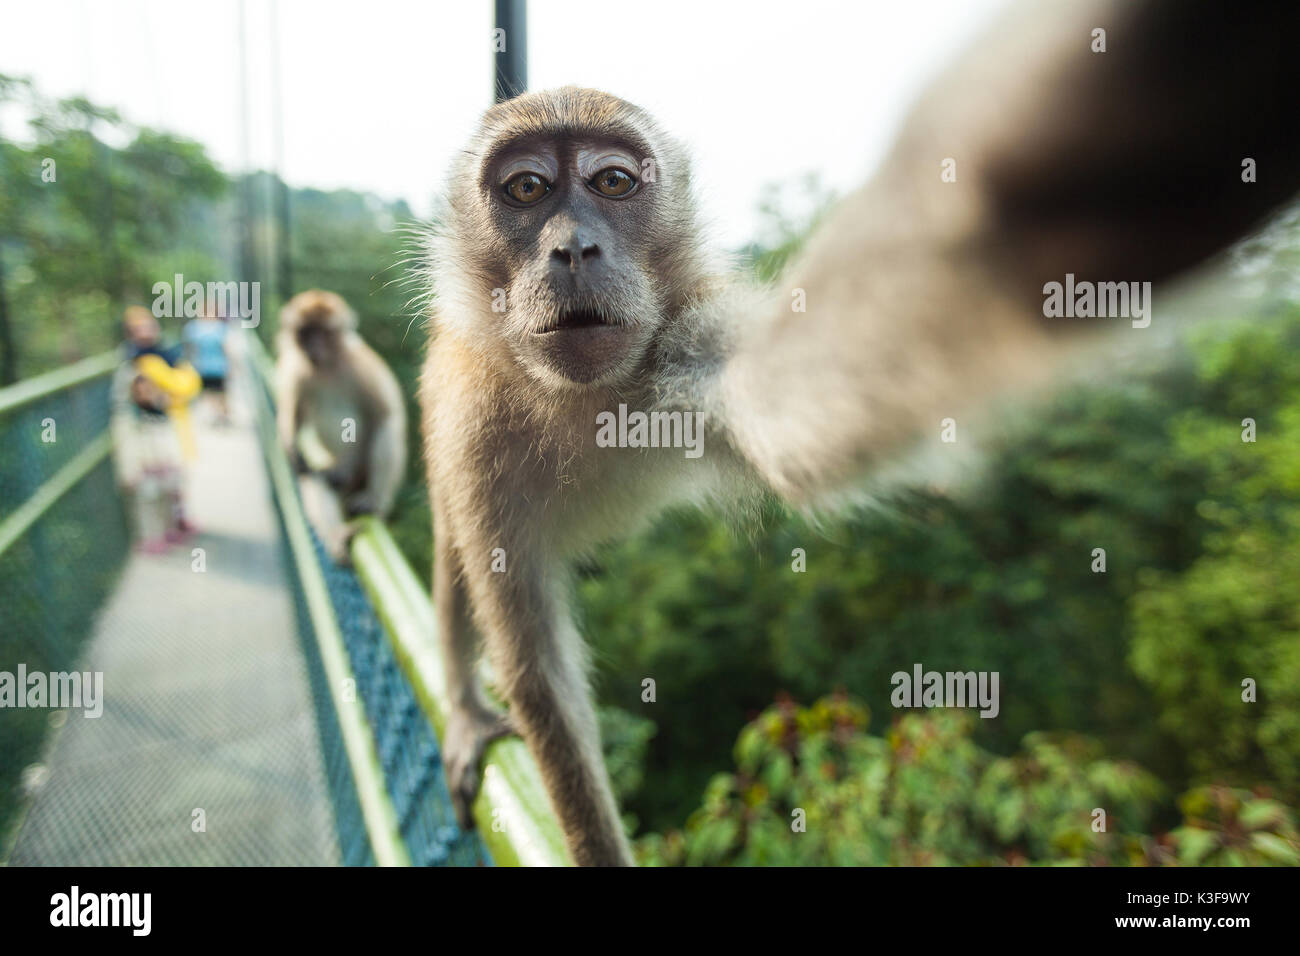 Monkey taking selfie Stock Photos, Royalty Free Monkey taking selfie Images  | Depositphotos